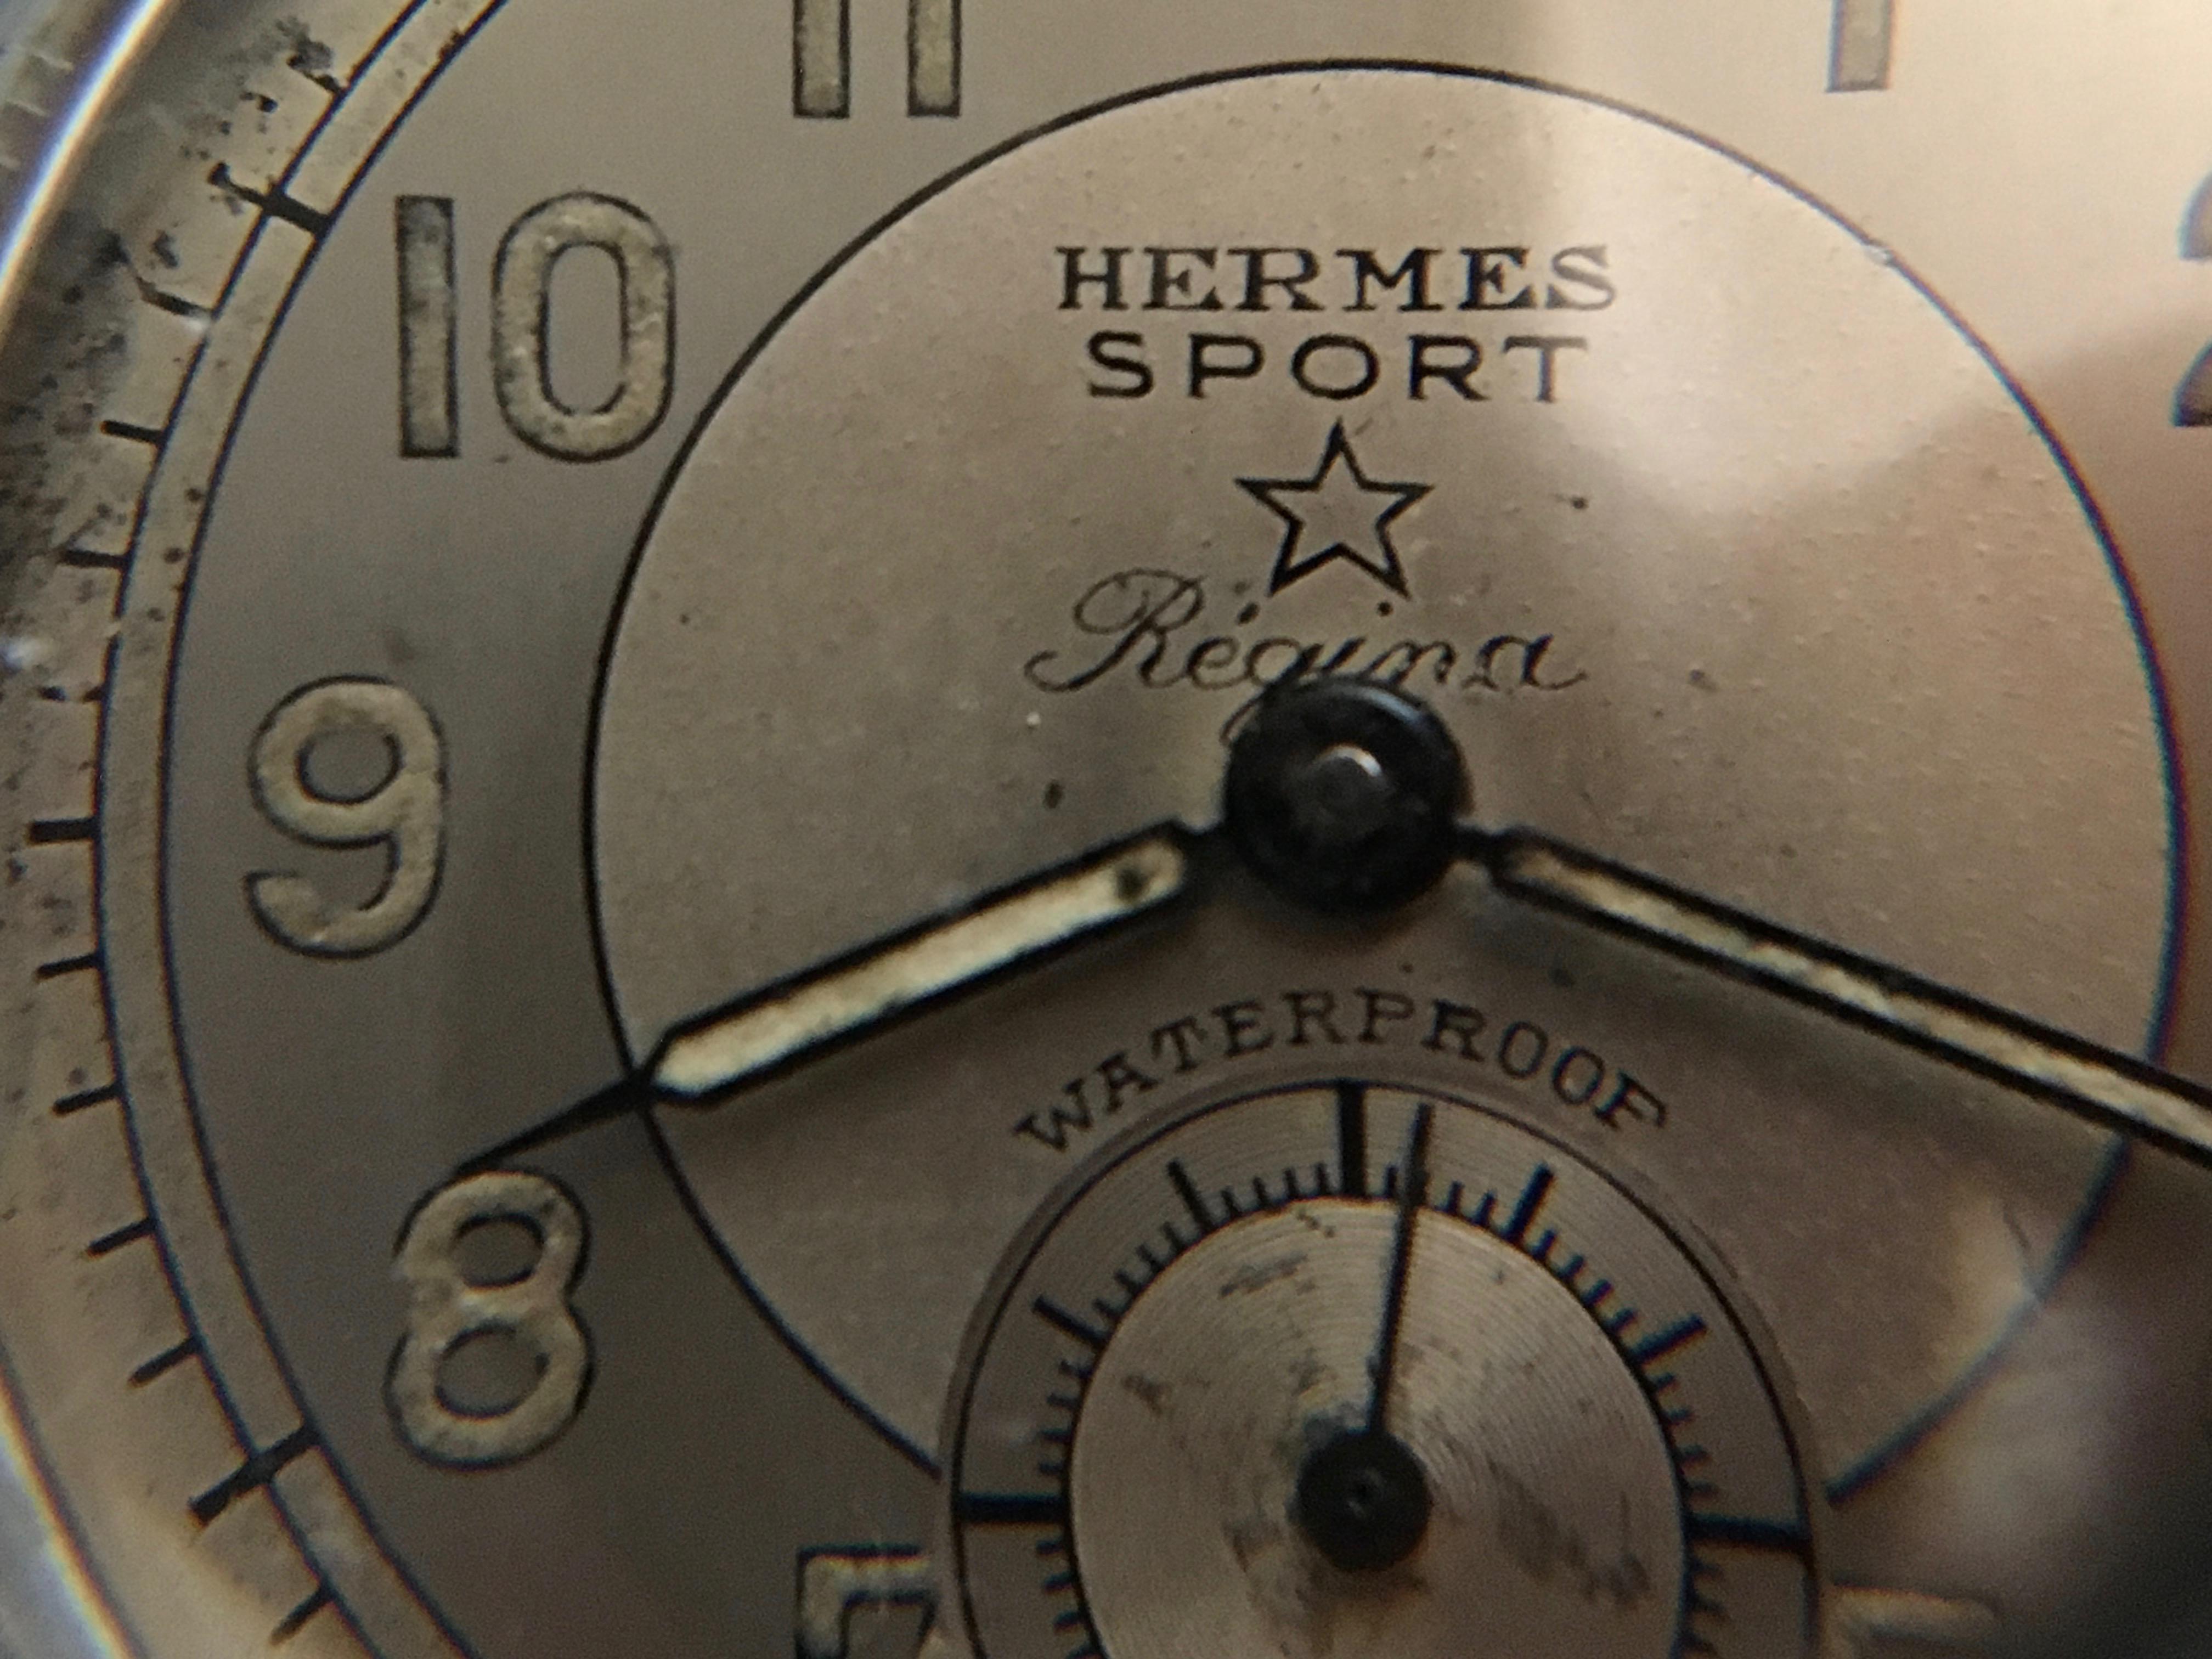 Hermes Sports Star Regina 1940's - 17 jewel Ernest Borel Neuchatel Waterproof Swiss Movement Watch.  Waterproof Screwback.  Nickel Plated with a new Michele Alligator Strap and original Buckle.  